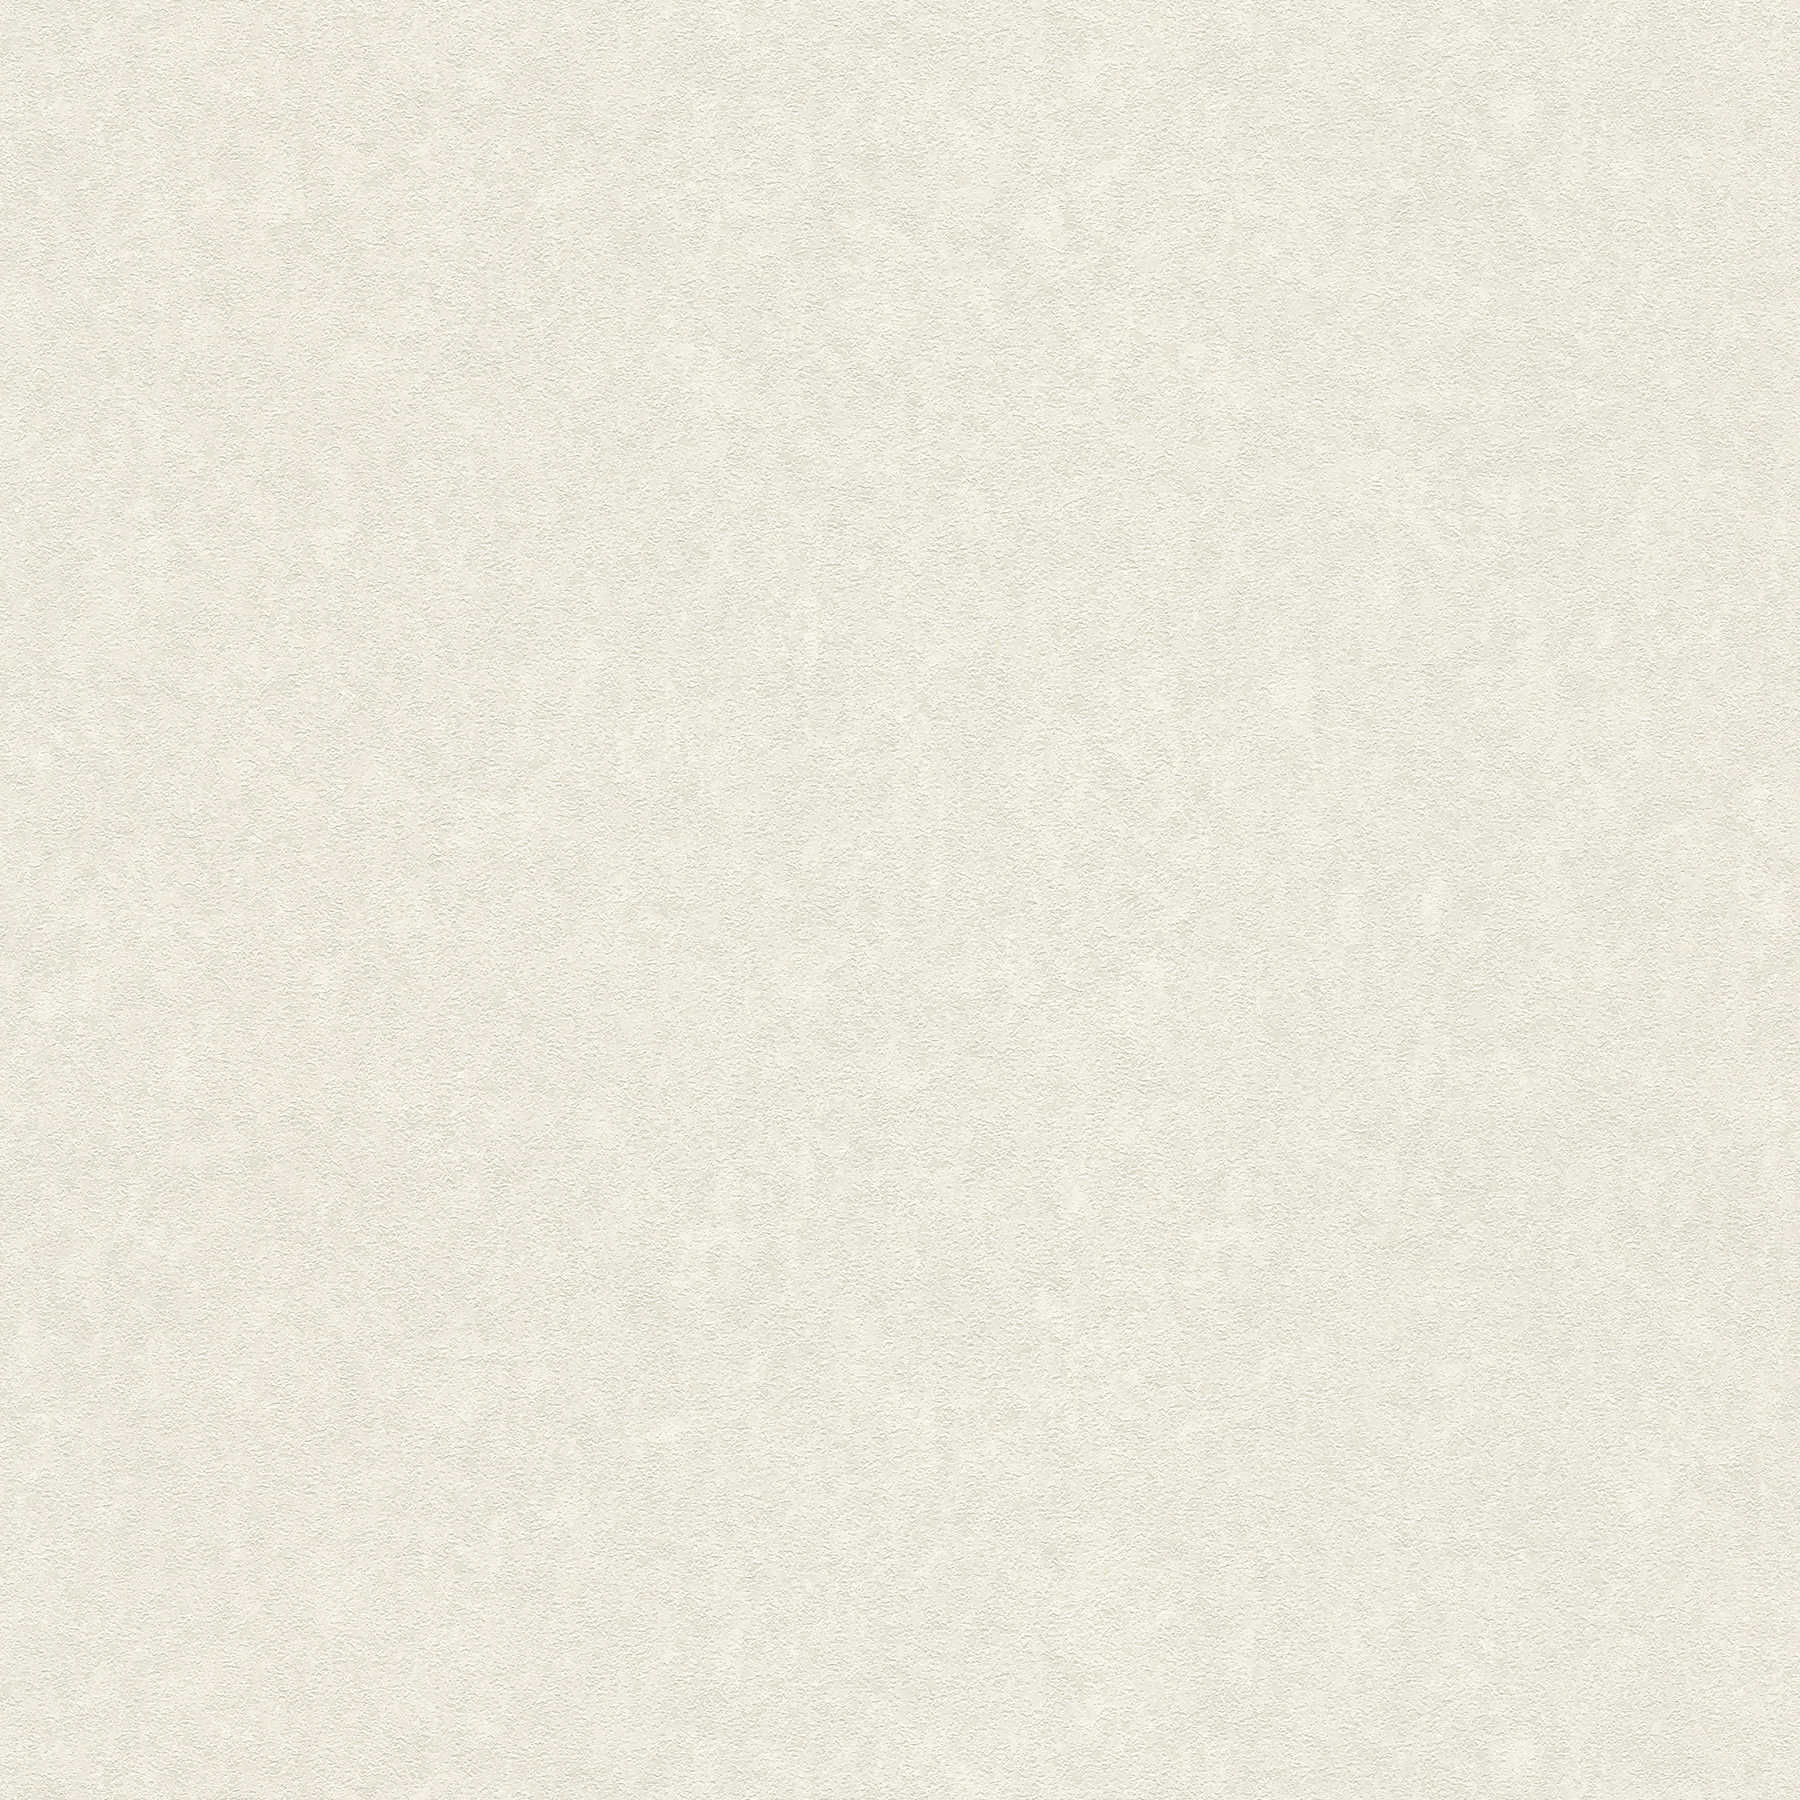 Cream VERSACE plain wallpaper with fine structure - cream
